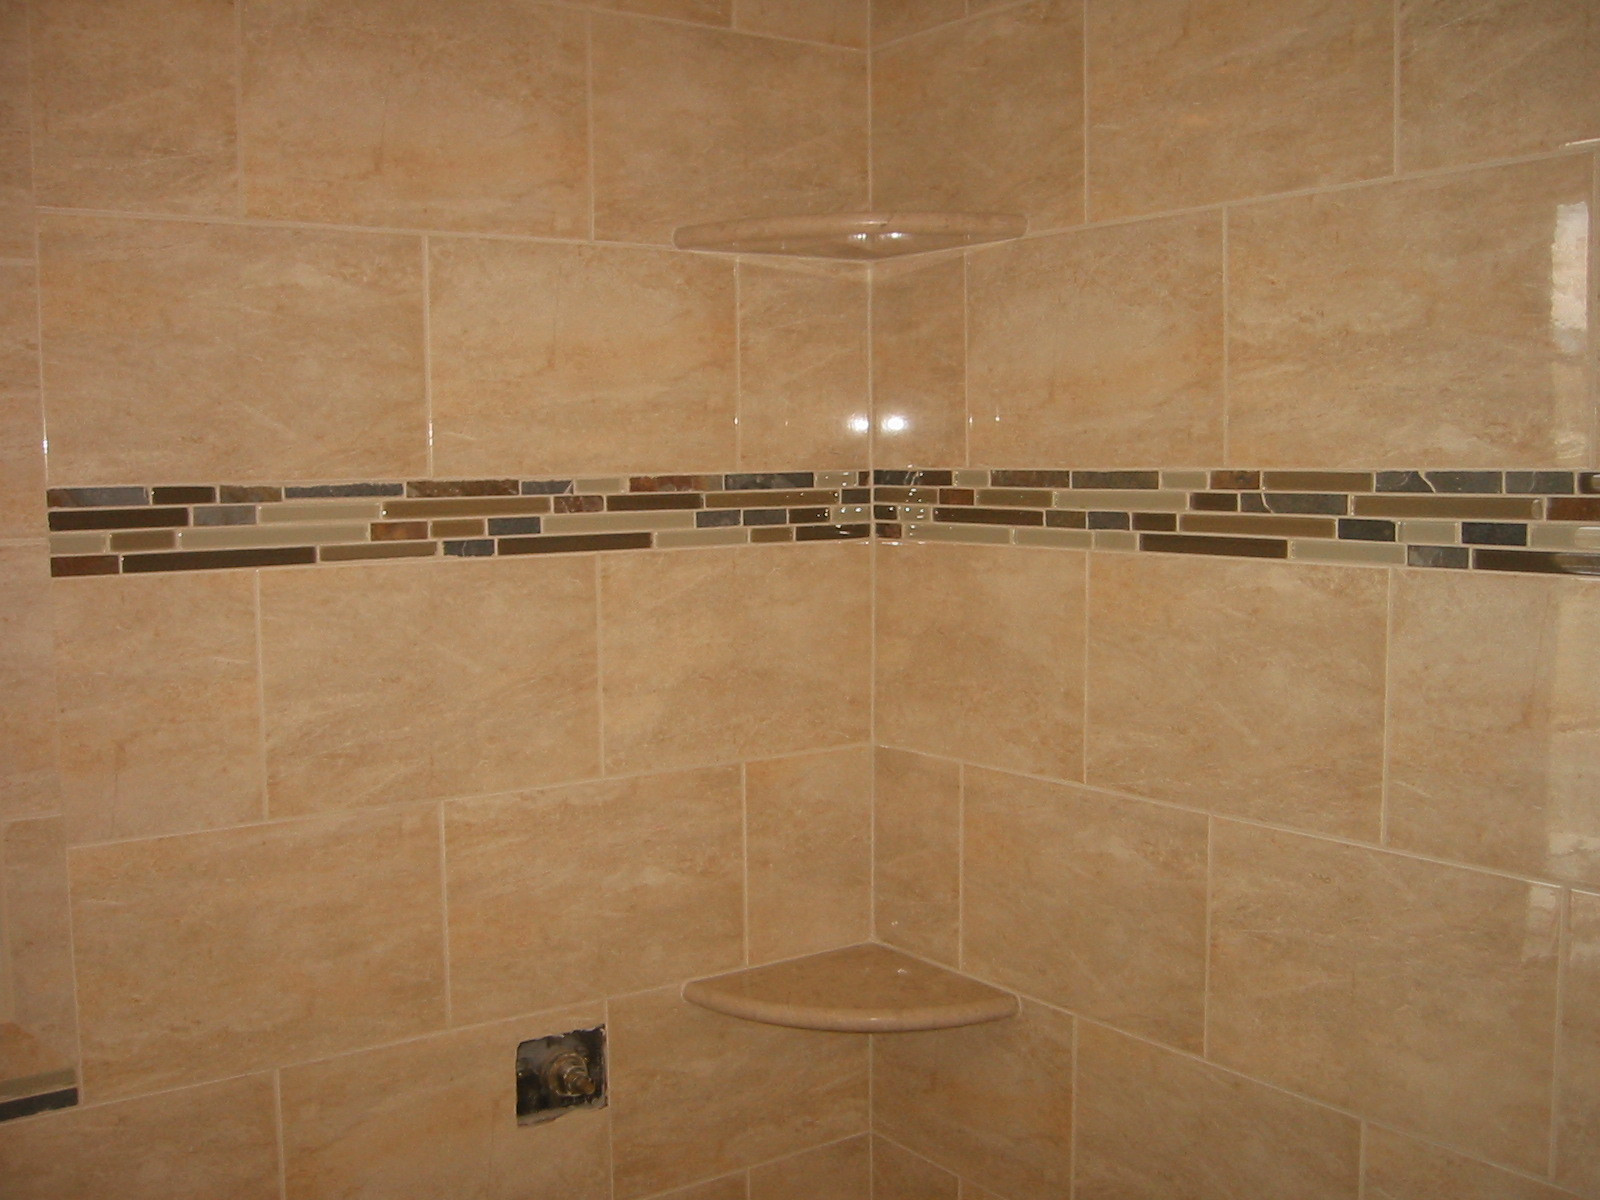 Repairing Bathroom Tiles
 How To Repair Bathroom Tiles Shower Replacement Parts